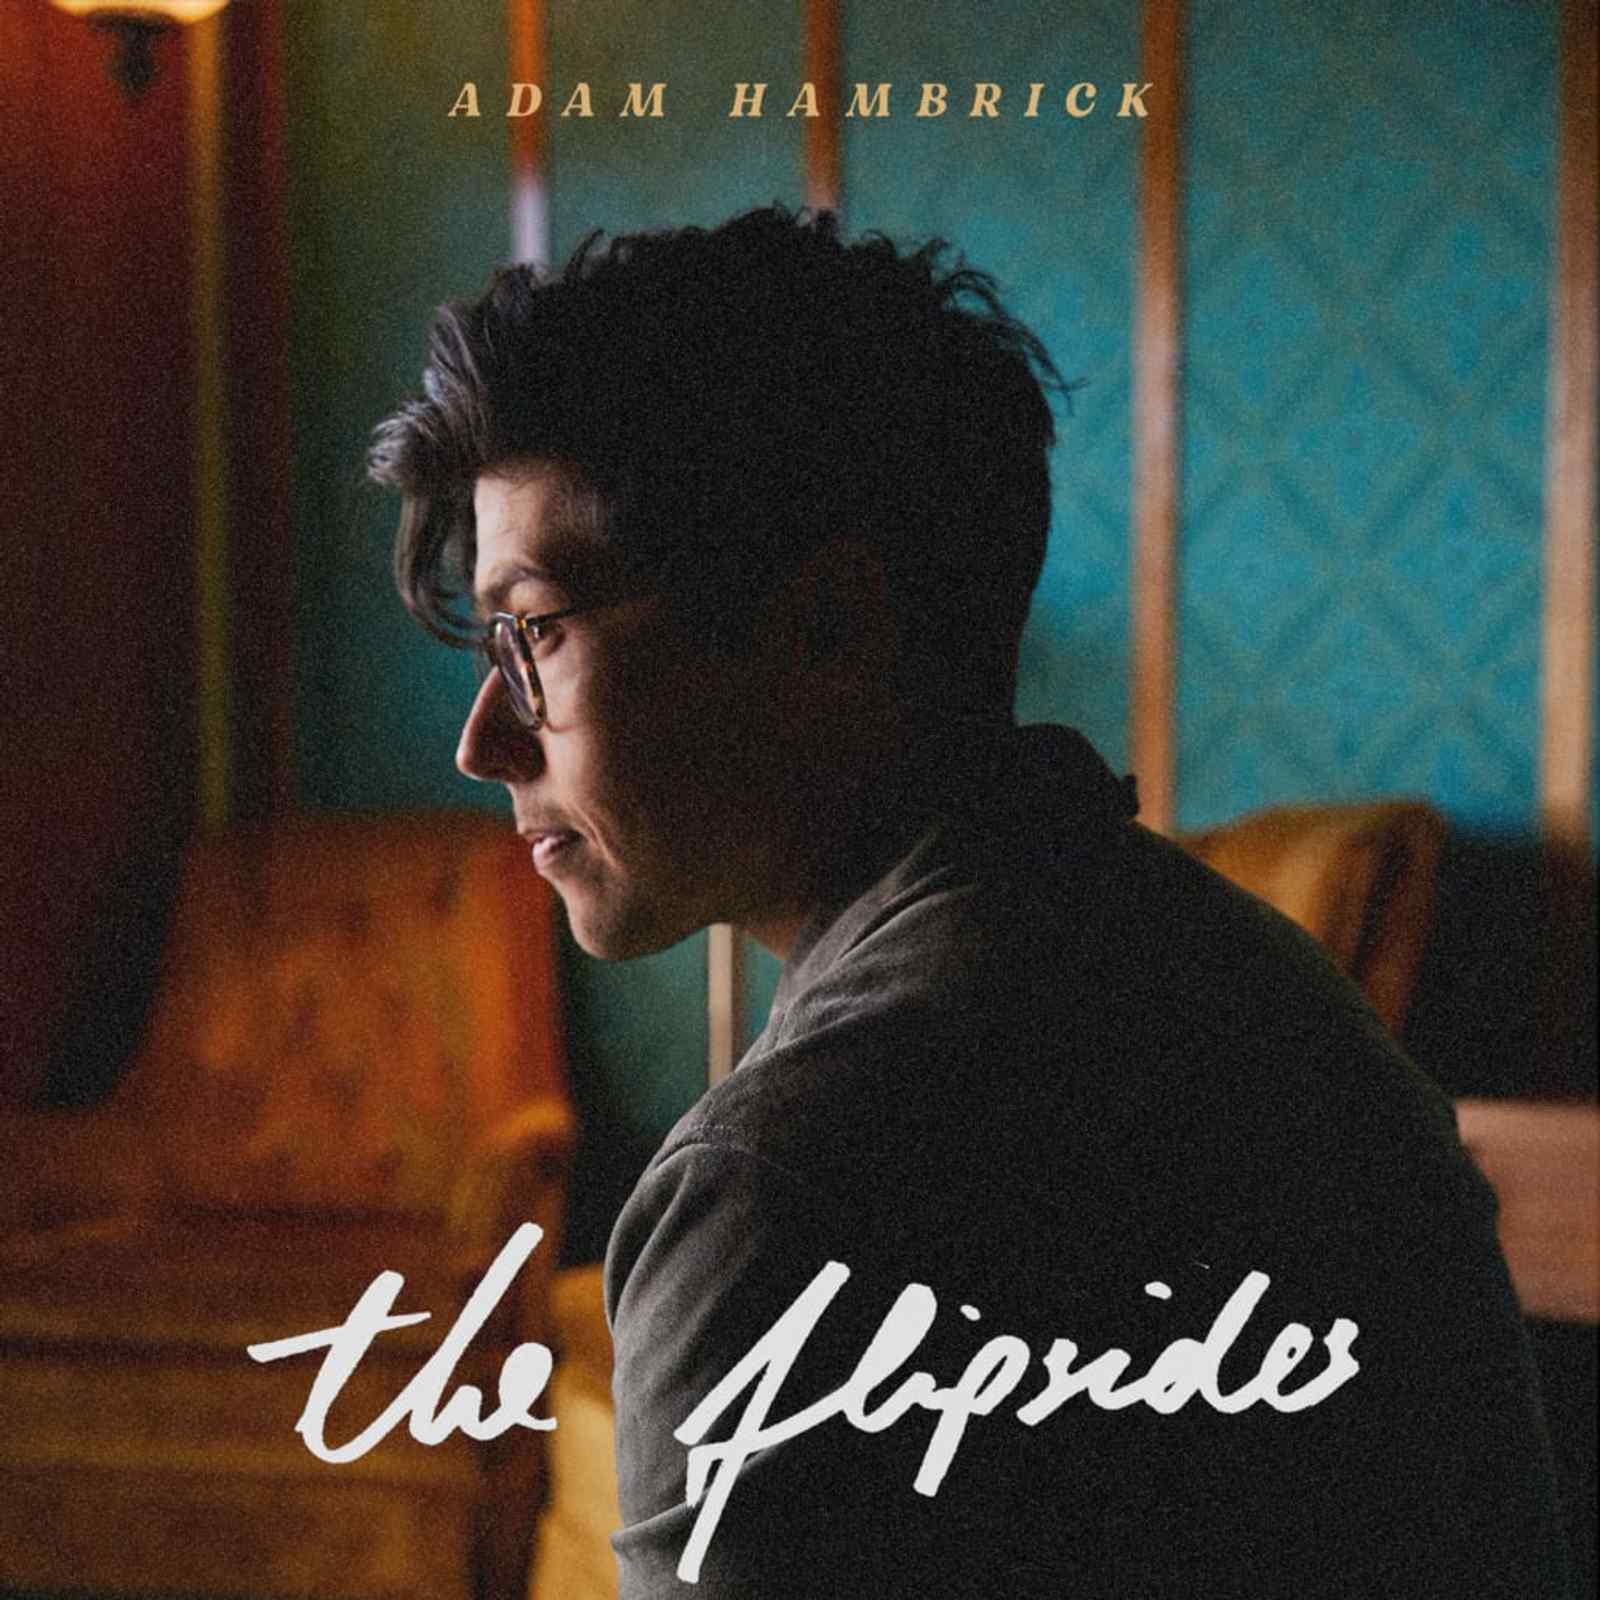 The Flipsides EP by Adam Hambrick